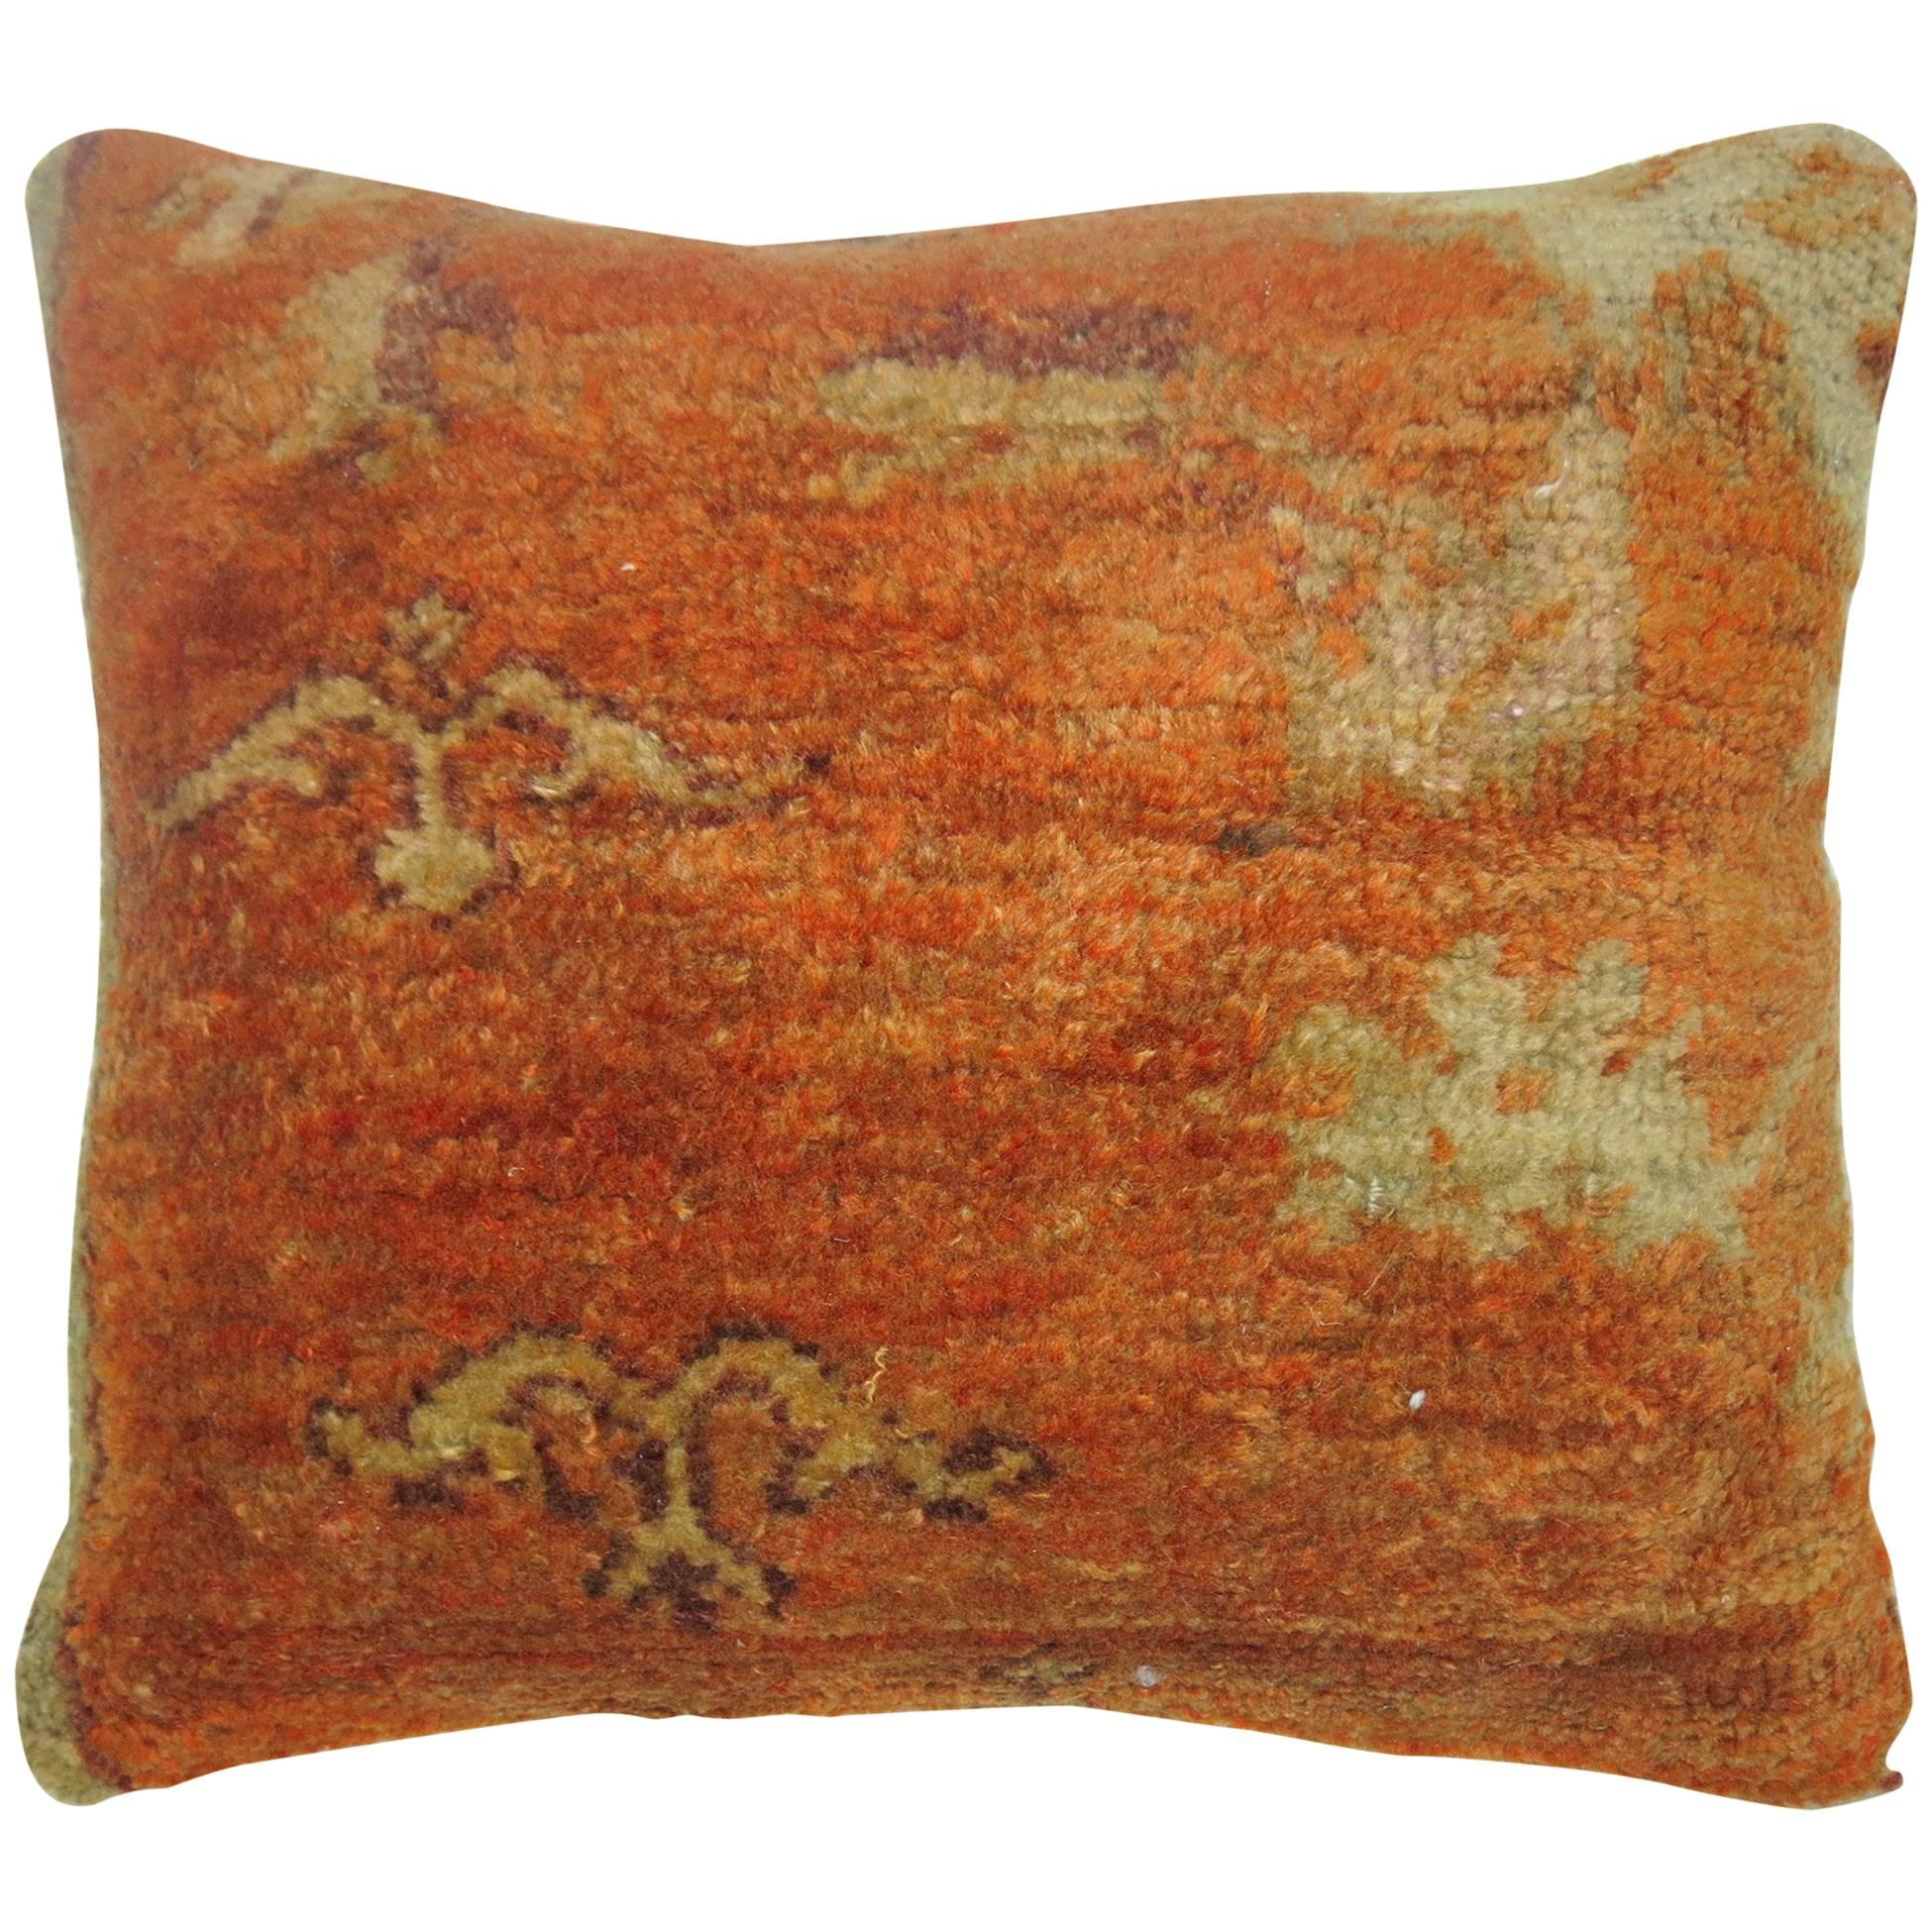 Antique Oushak Rug Pillow